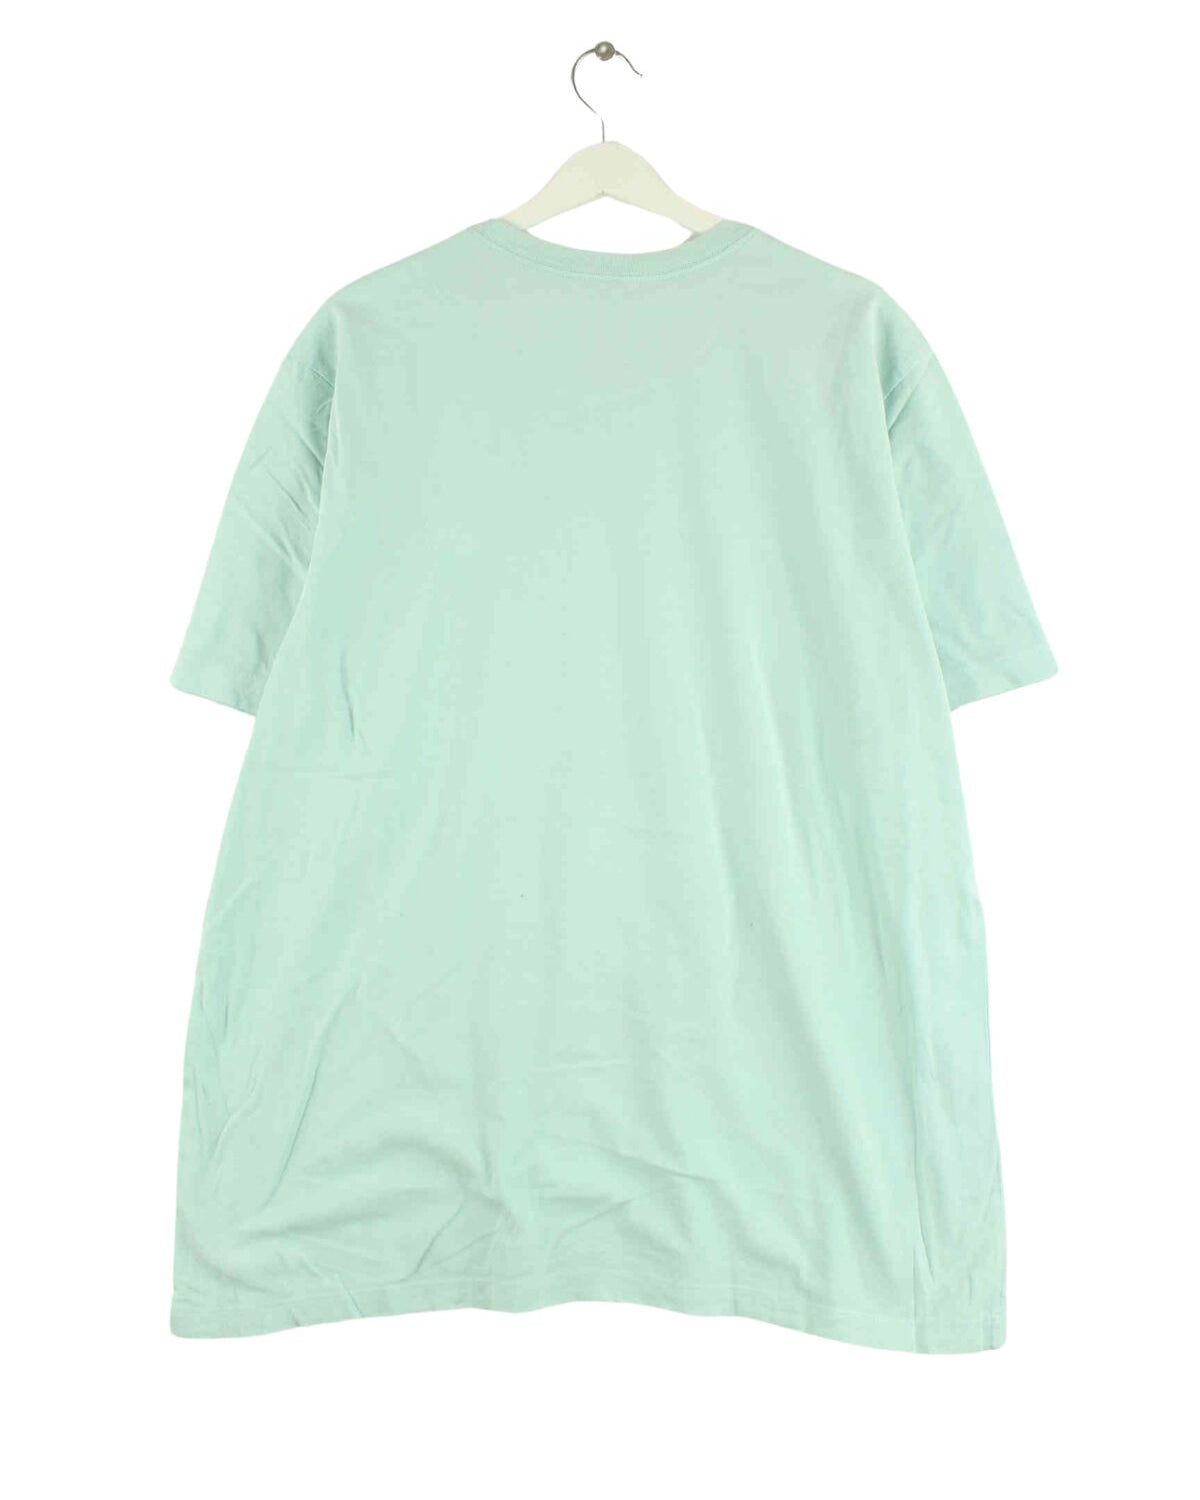 Nike Basic T-Shirt Türkis XL (back image)